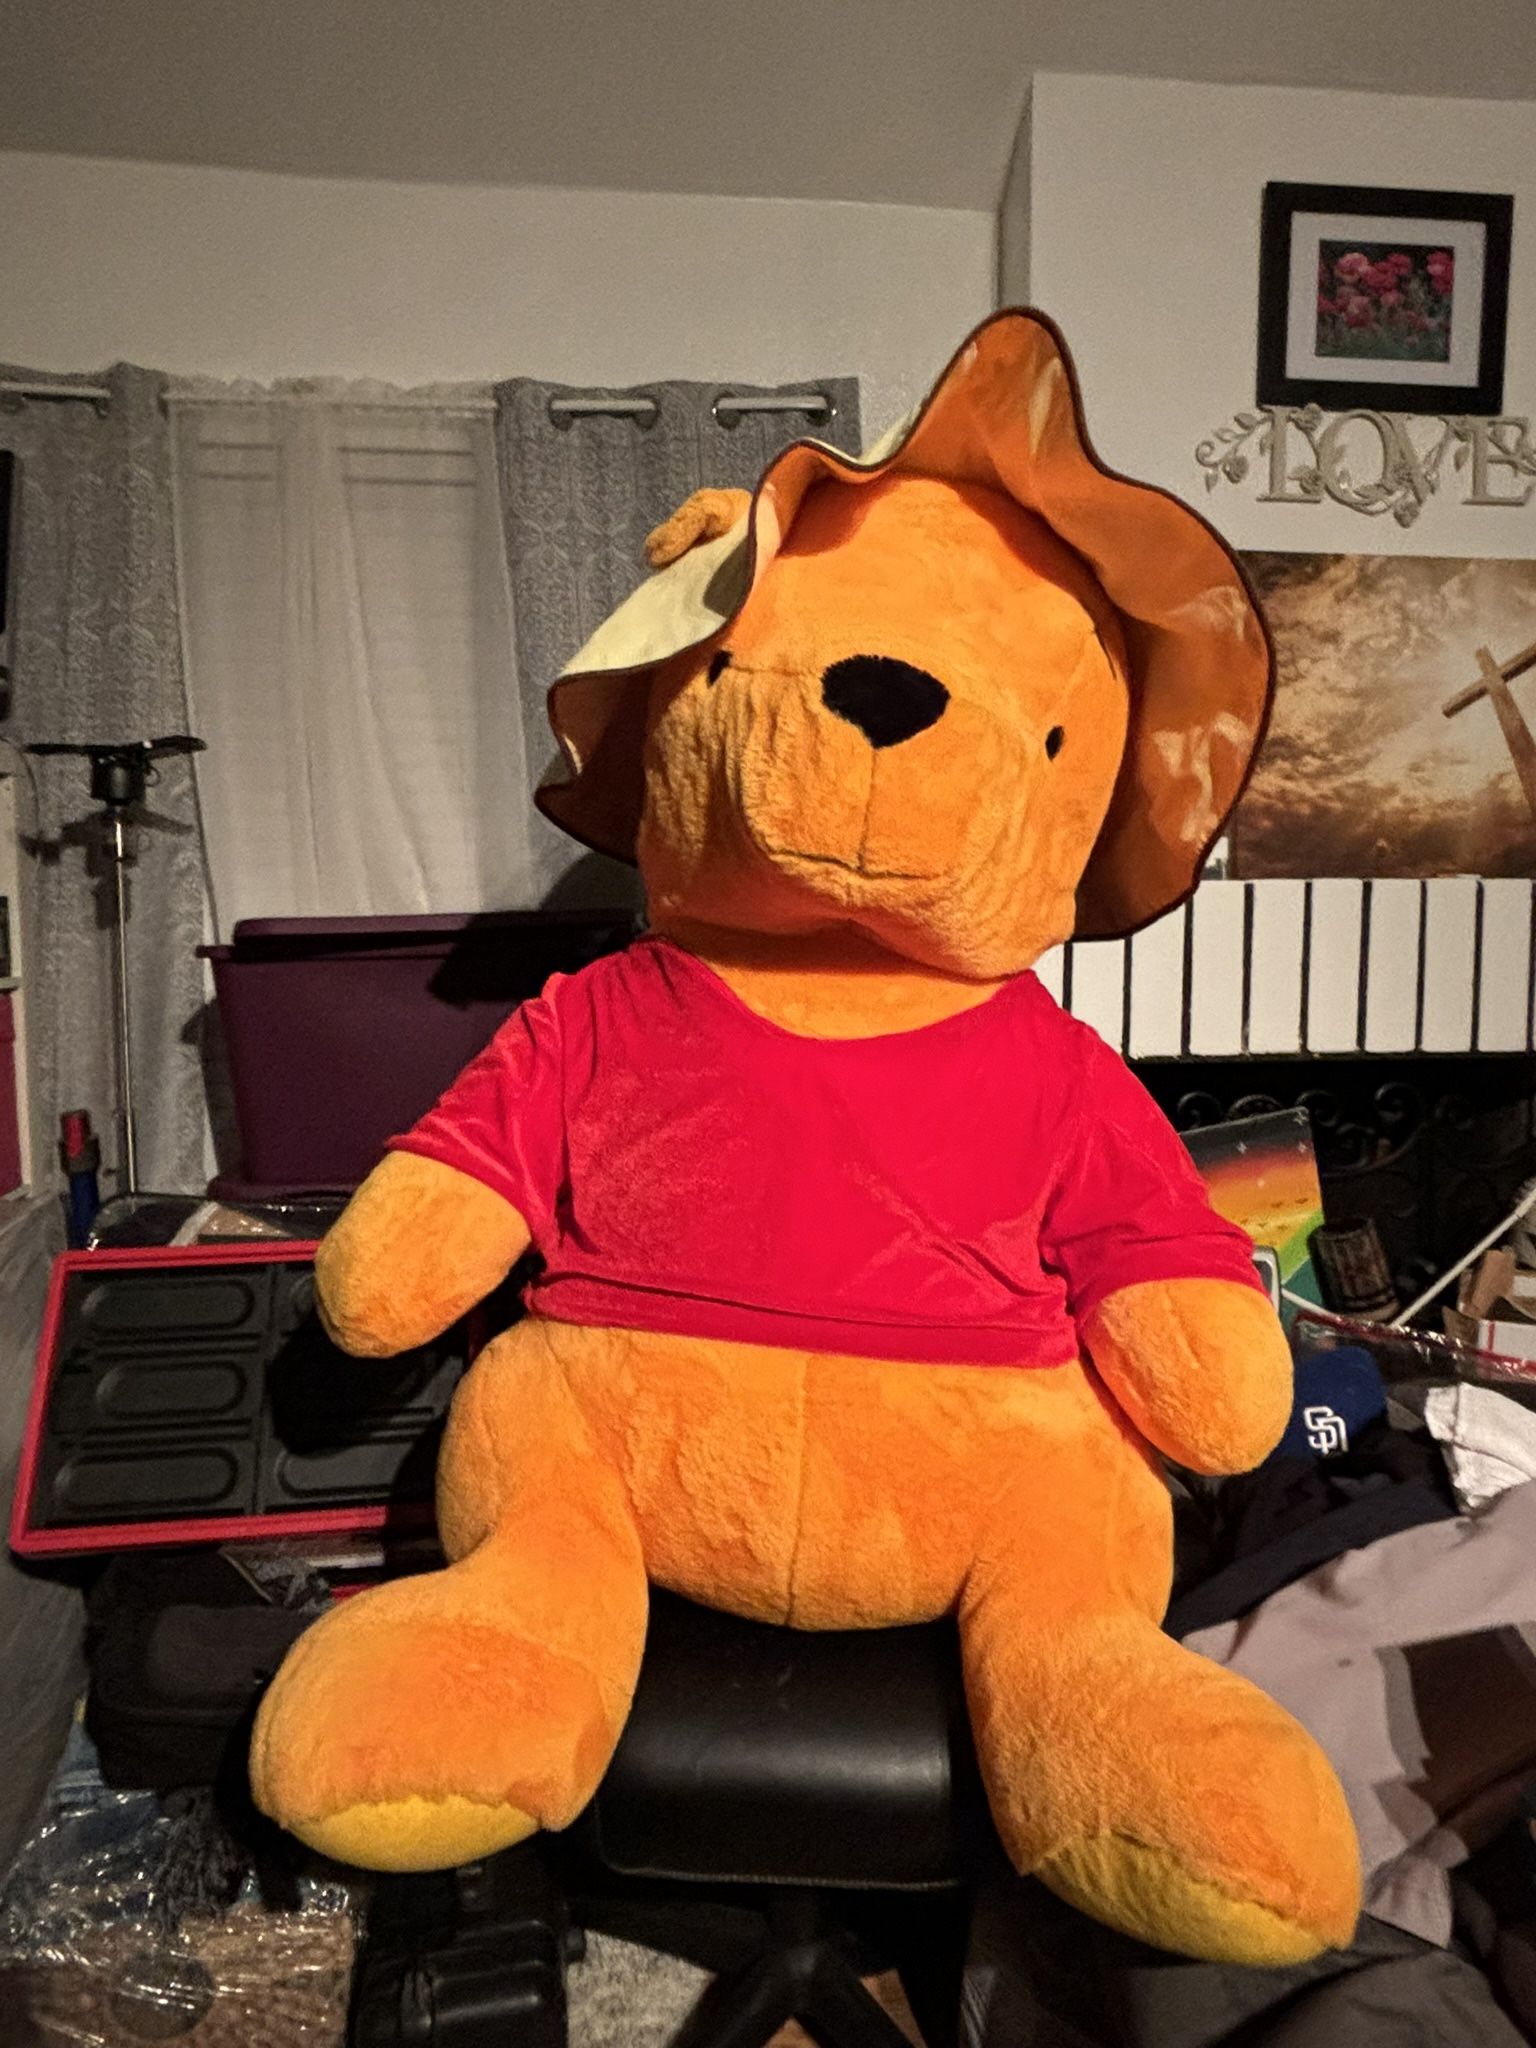 Winnie the Pooh Giant Stuffed Bear